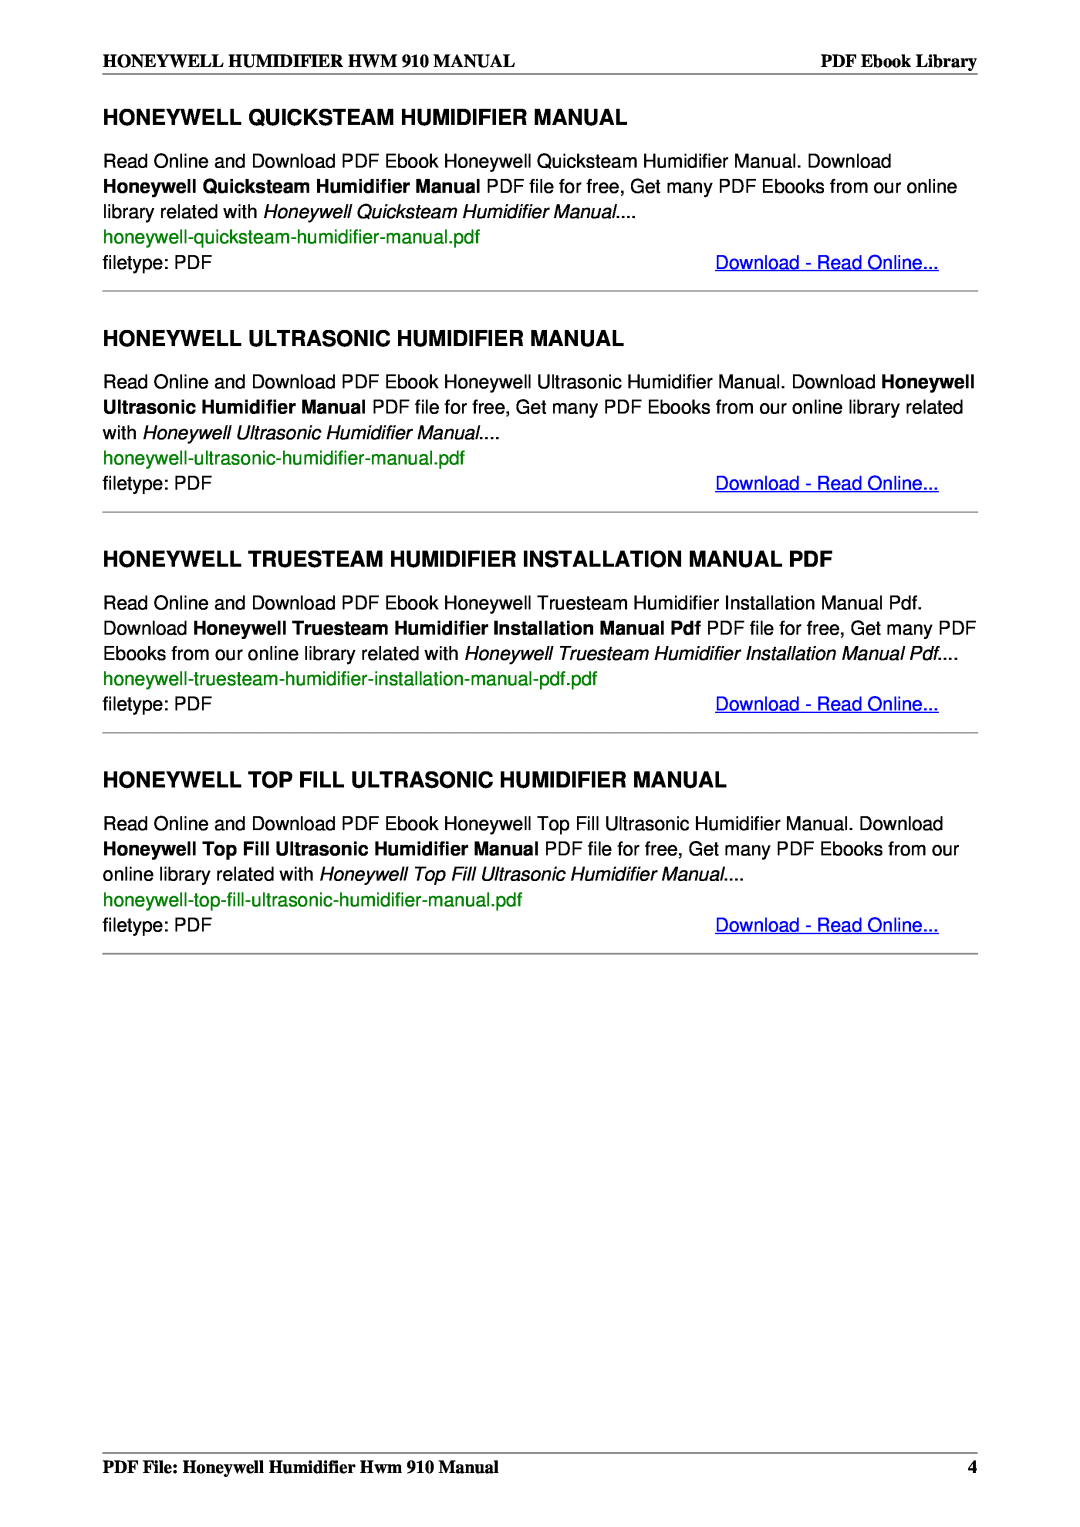 Honeywell HWM910 manual Honeywell Quicksteam Humidifier Manual, Honeywell Ultrasonic Humidifier Manual 